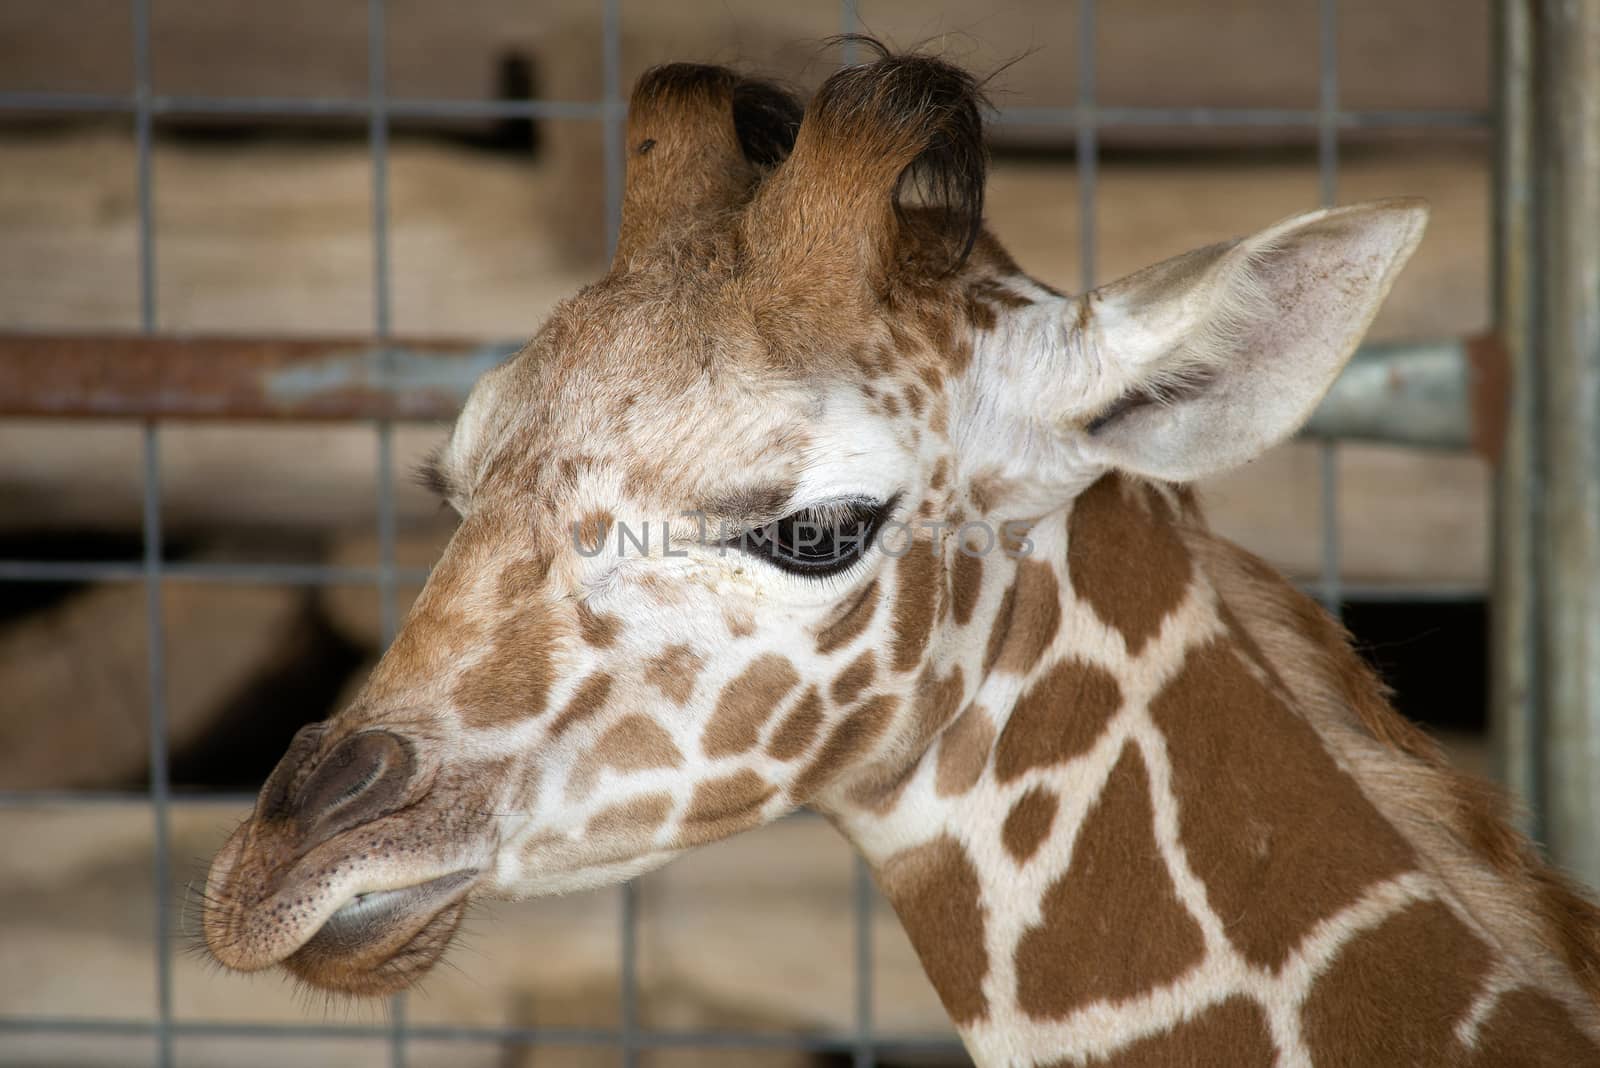 A baby giraffe in quarantine